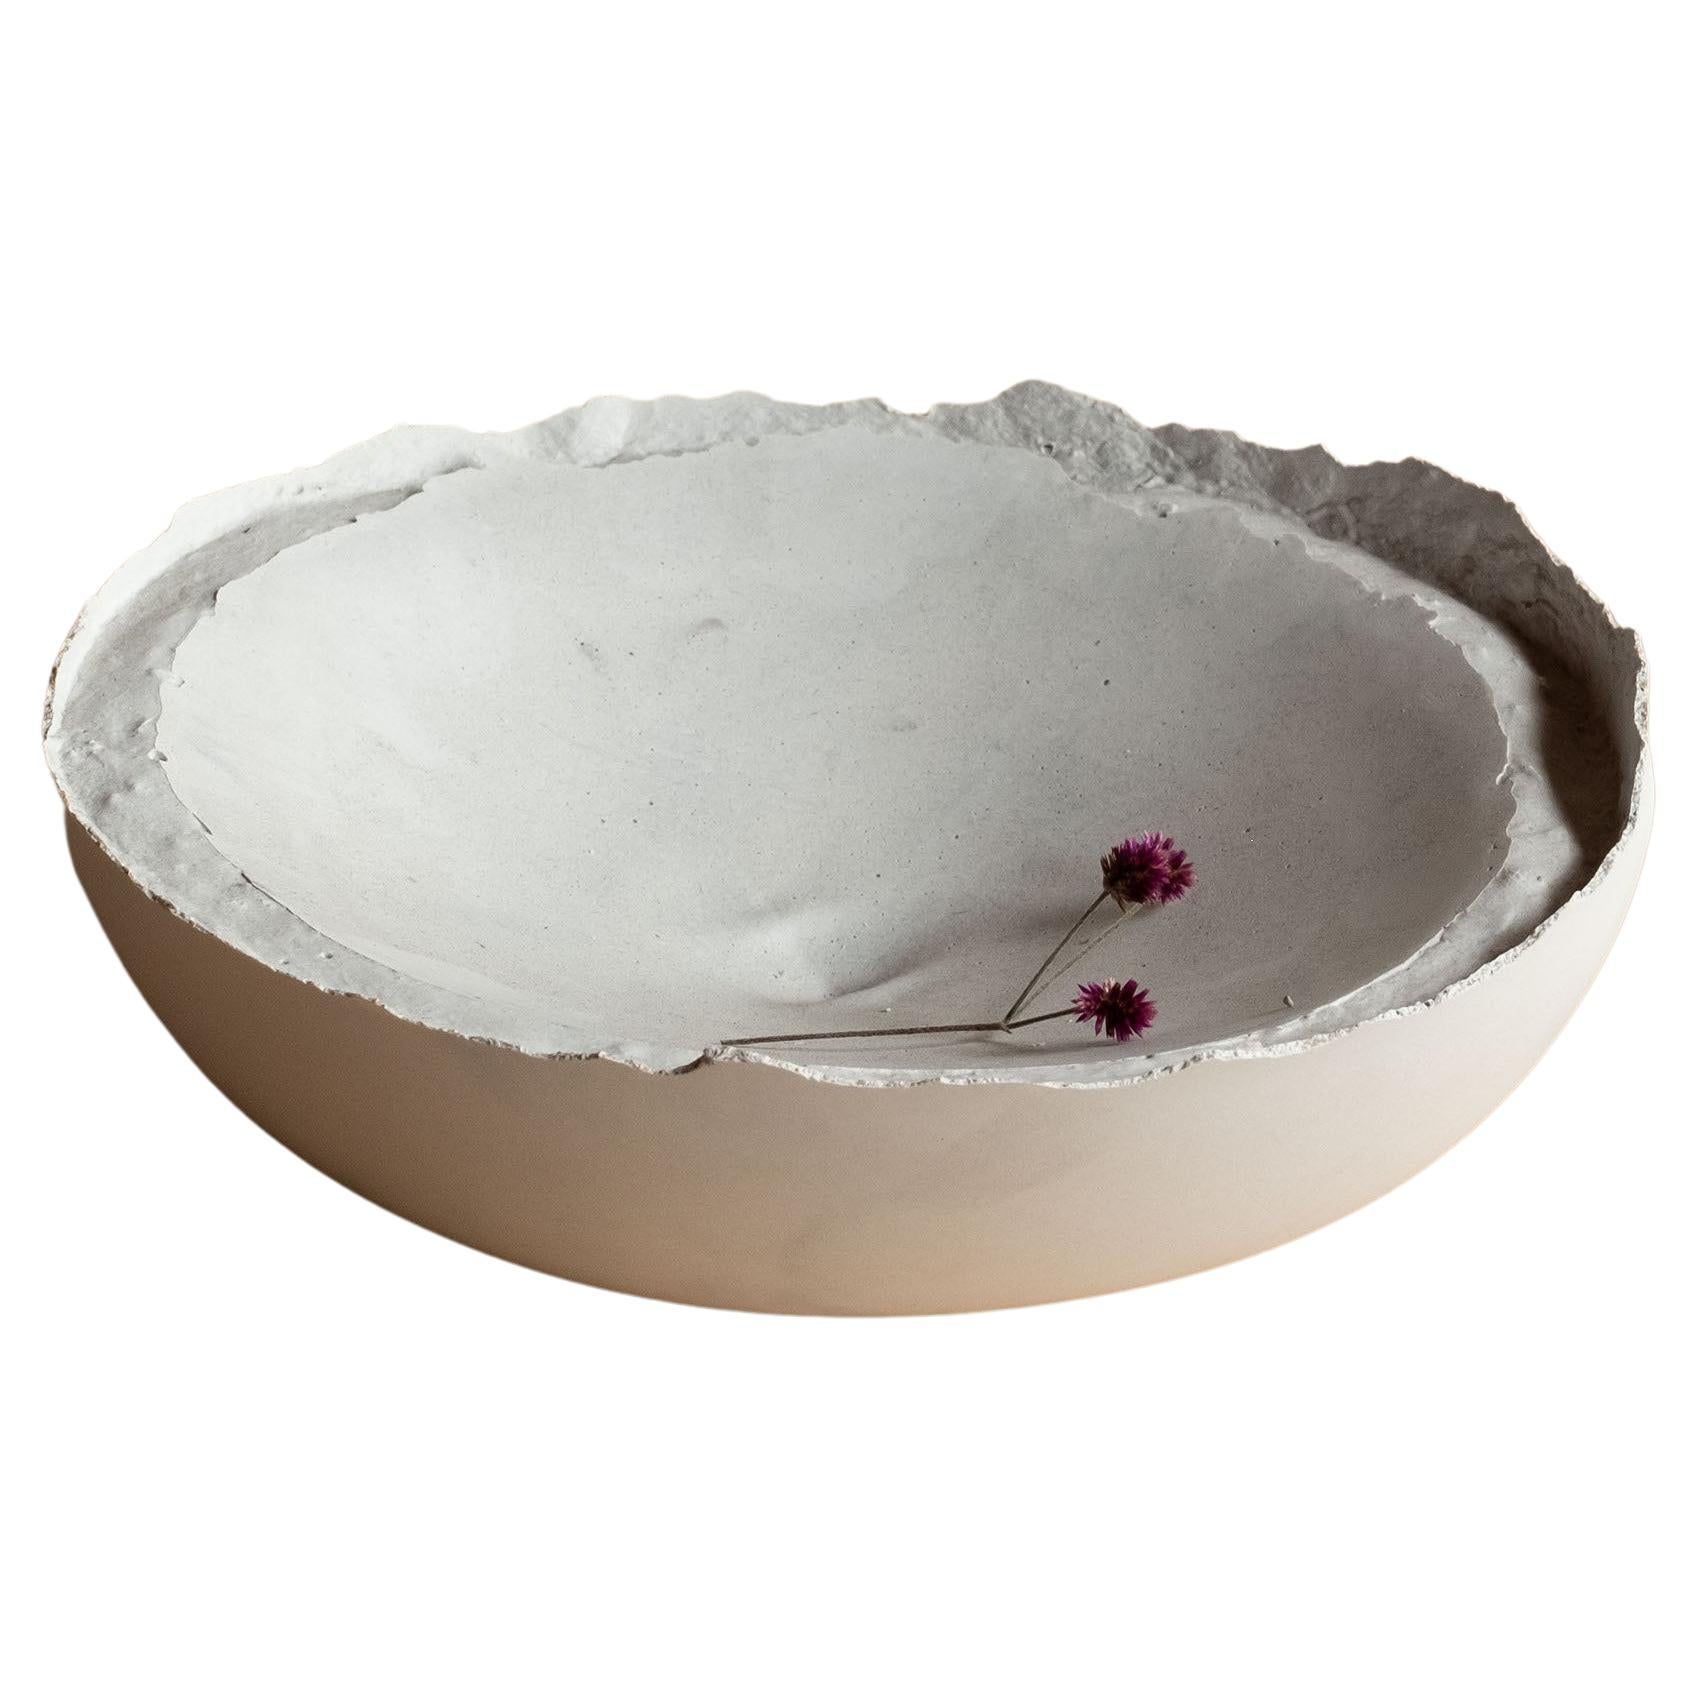 Handmade Cast Concrete Bowl in Grey by UMÉ Studio For Sale